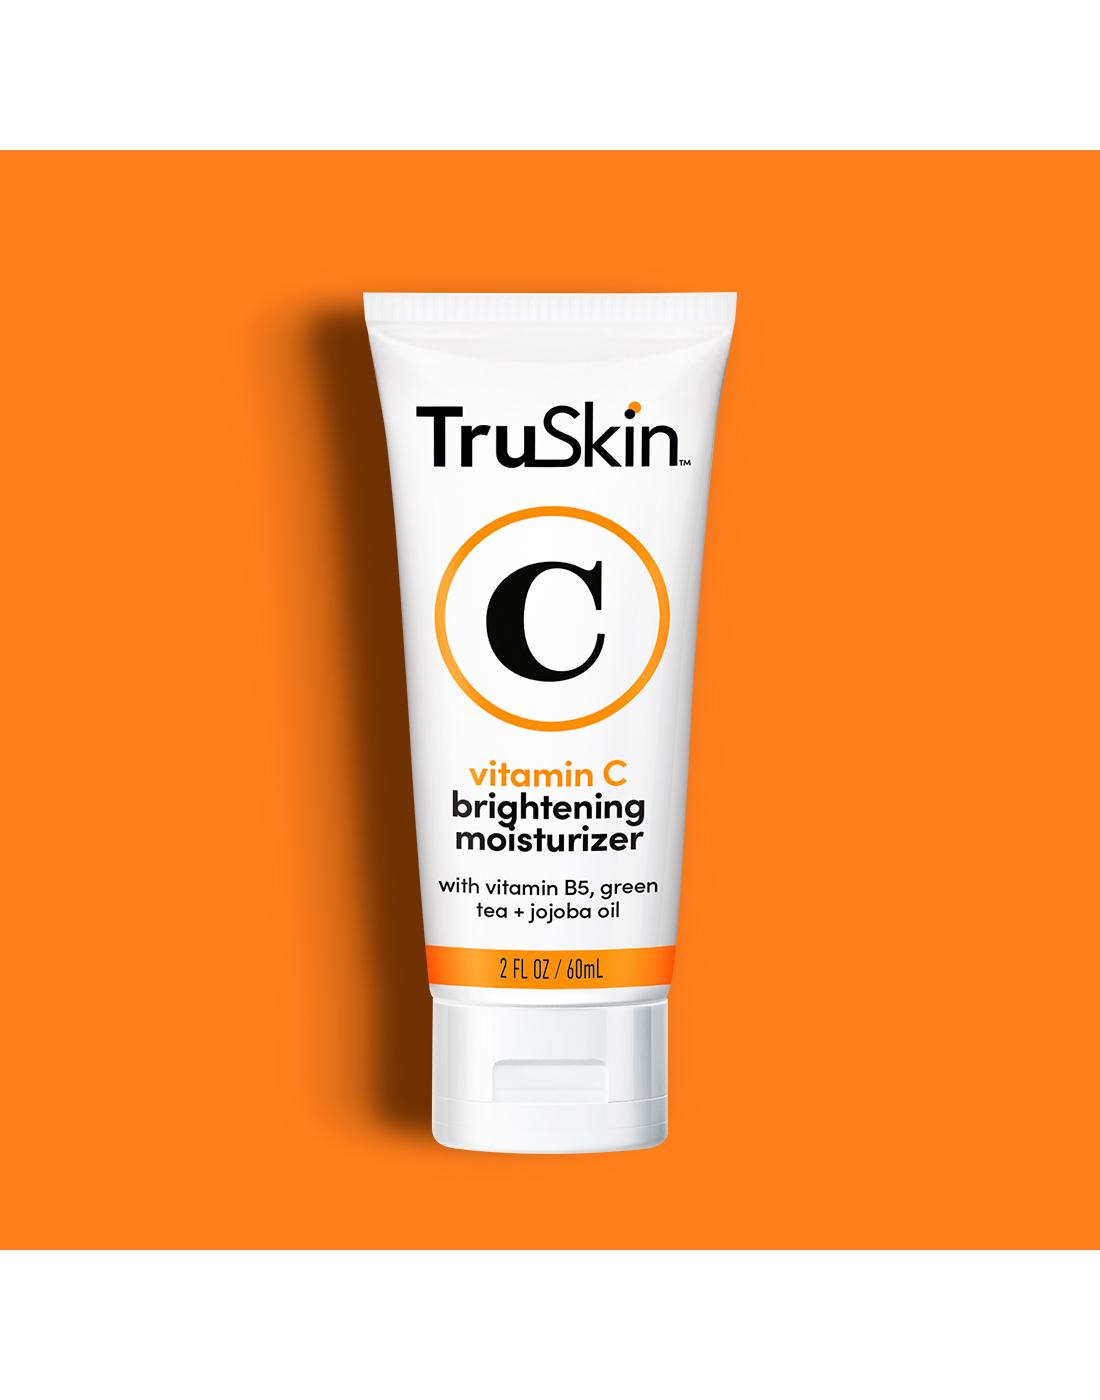 TruSkin Vitamin C Brightening Moisturizer; image 4 of 6